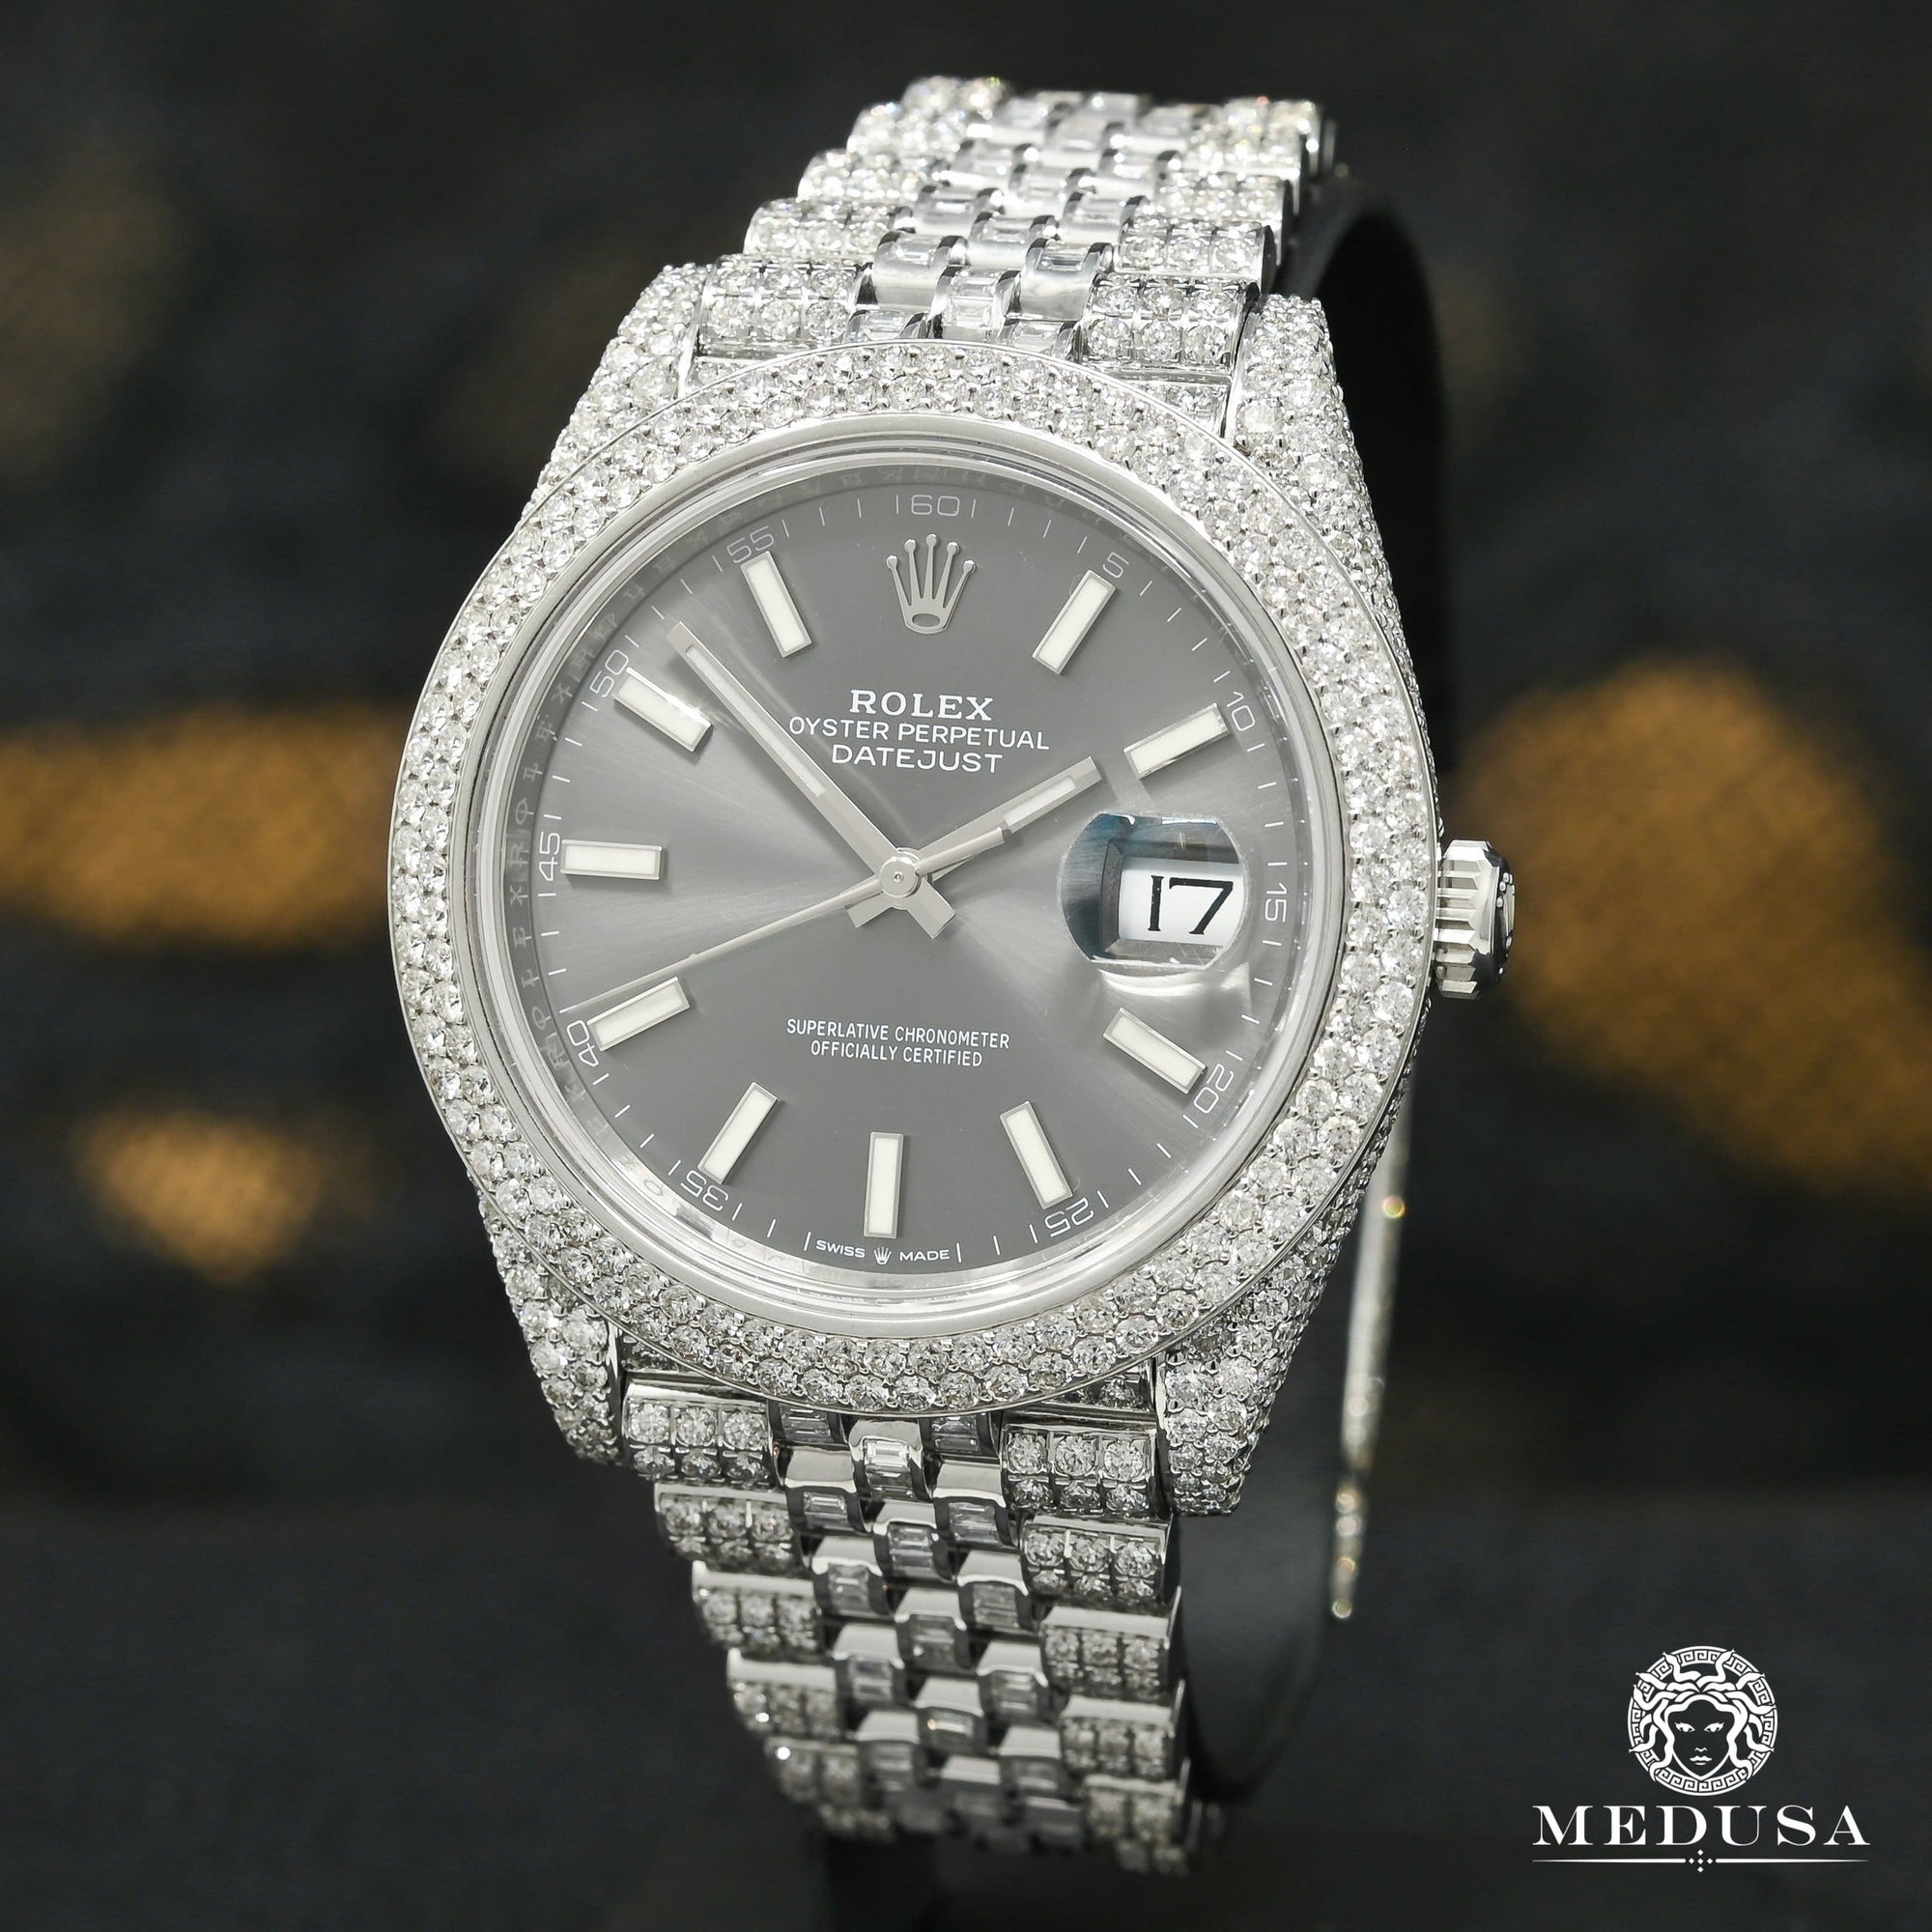 Rolex watch | Rolex Datejust Men's Watch 41mm - Jubilee Full Honeycomb Rhodium Stainless